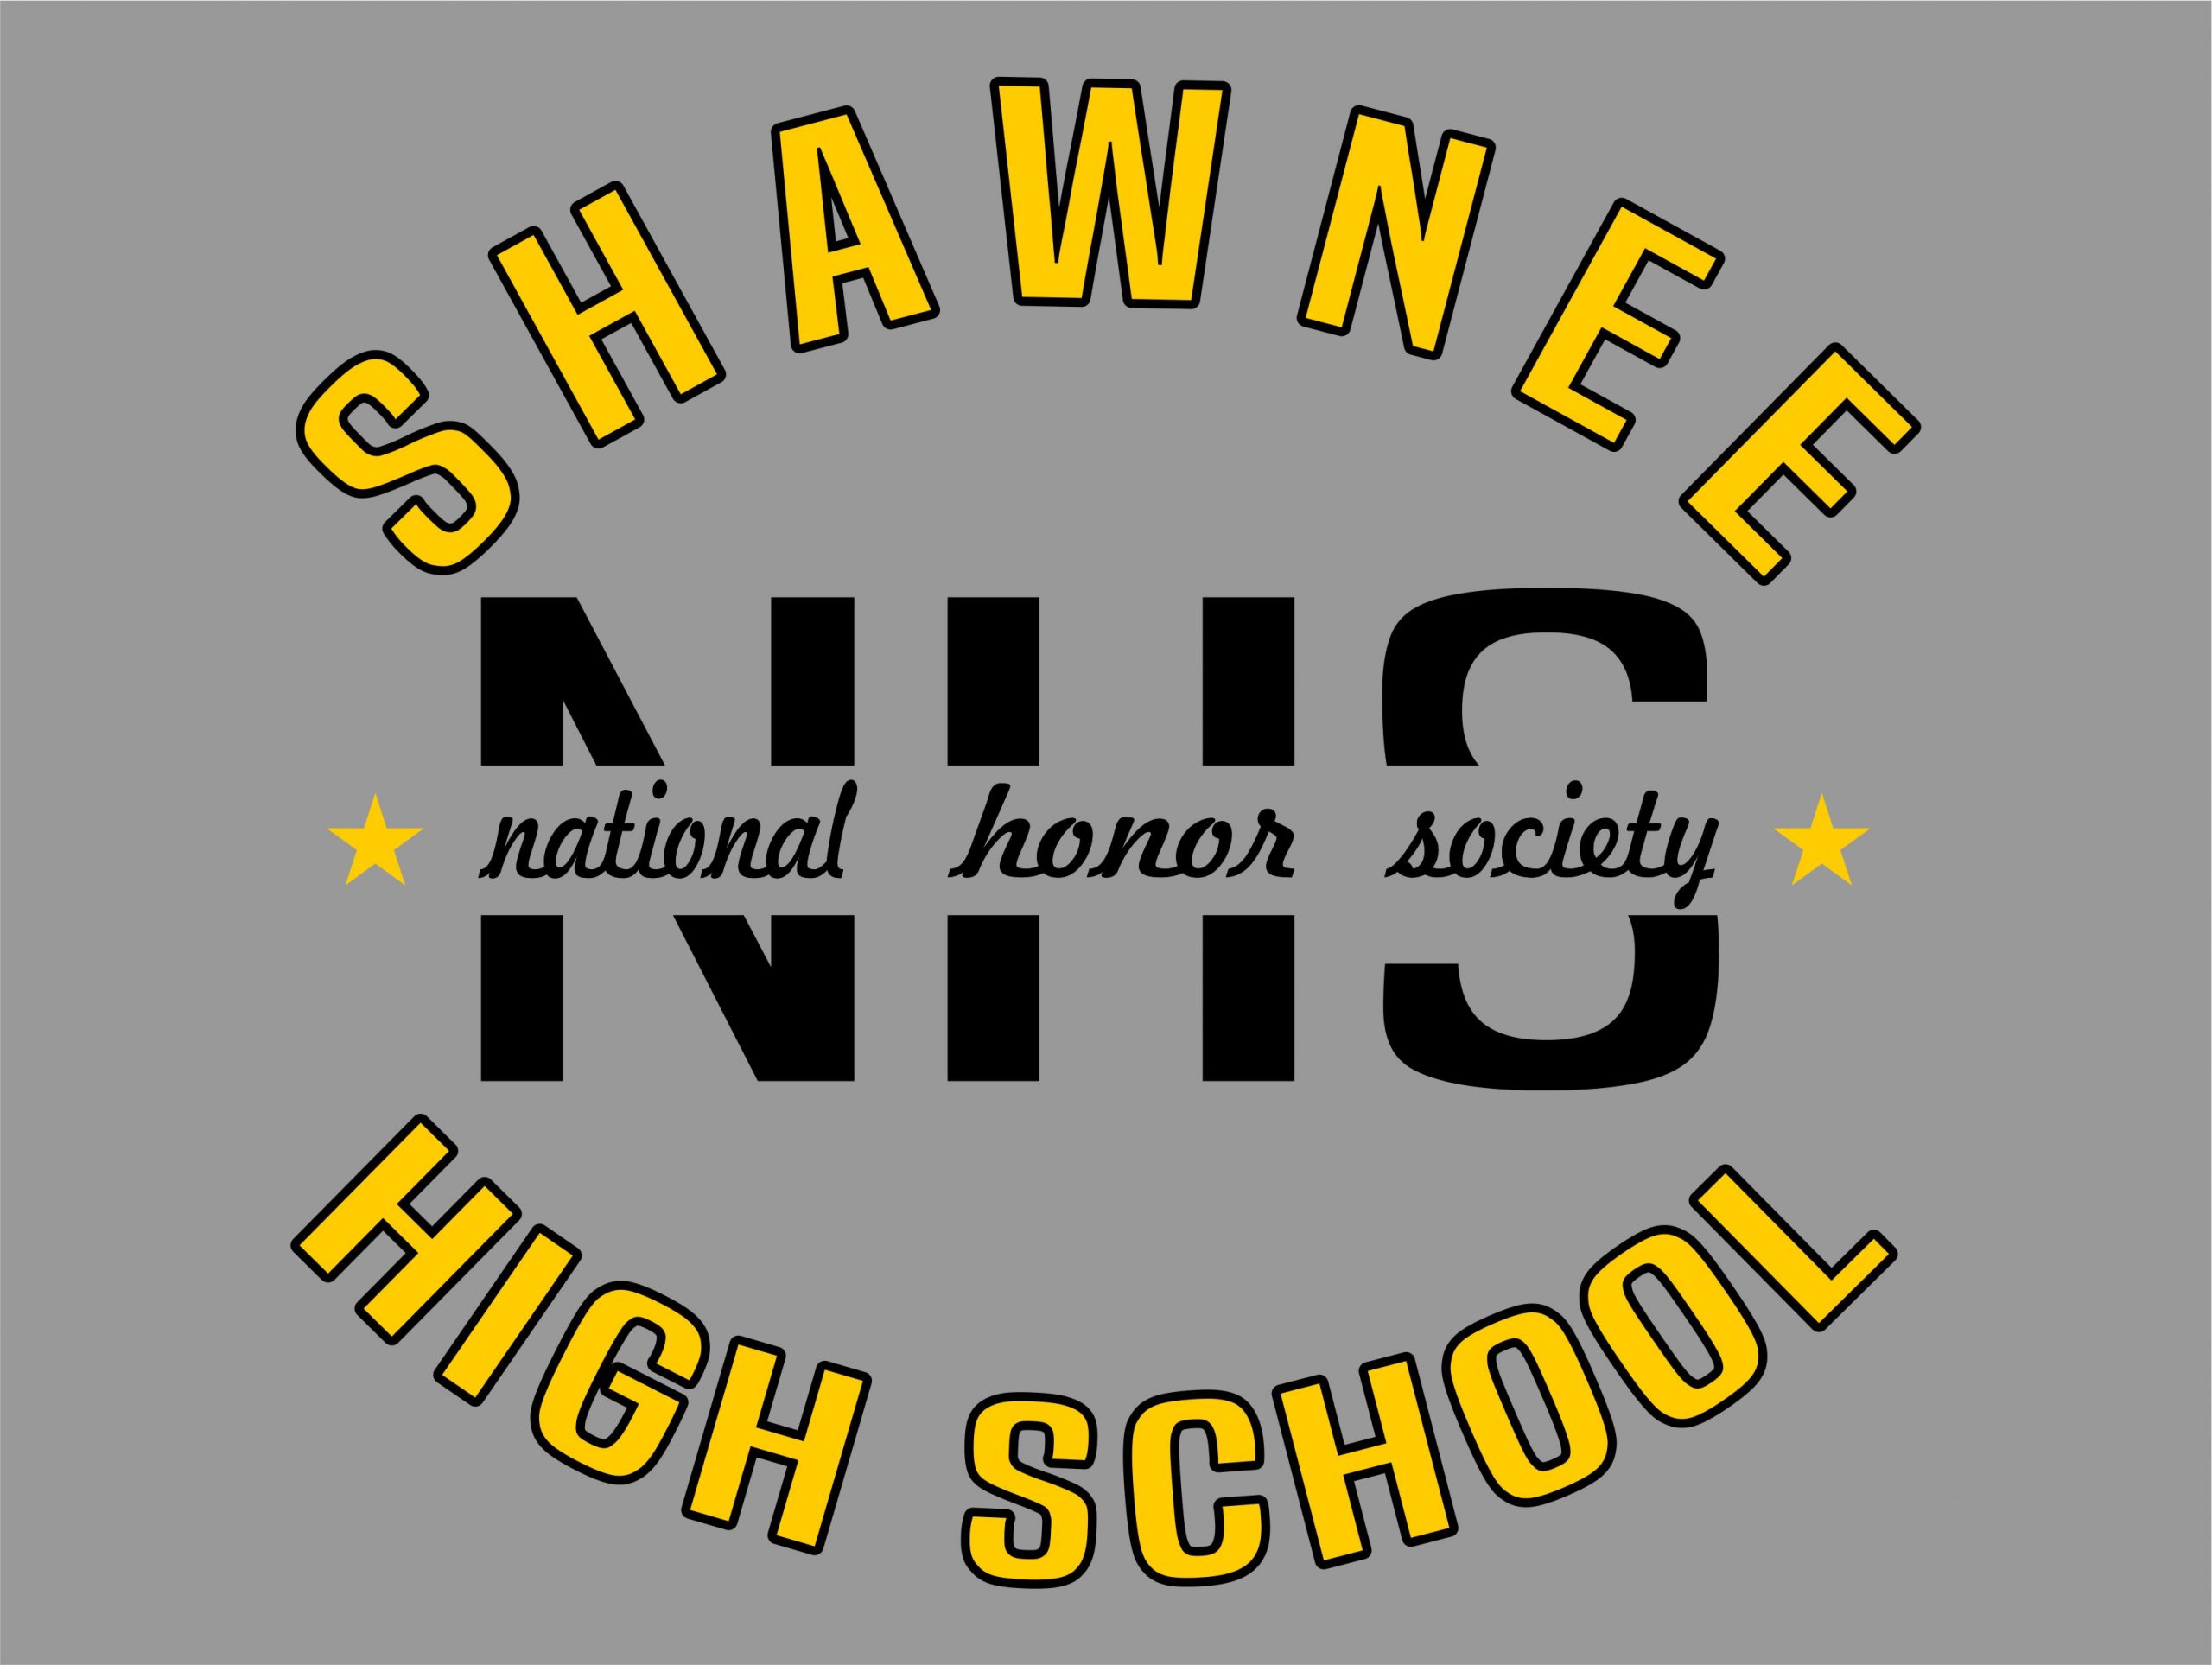 Shawnee National Honor Society